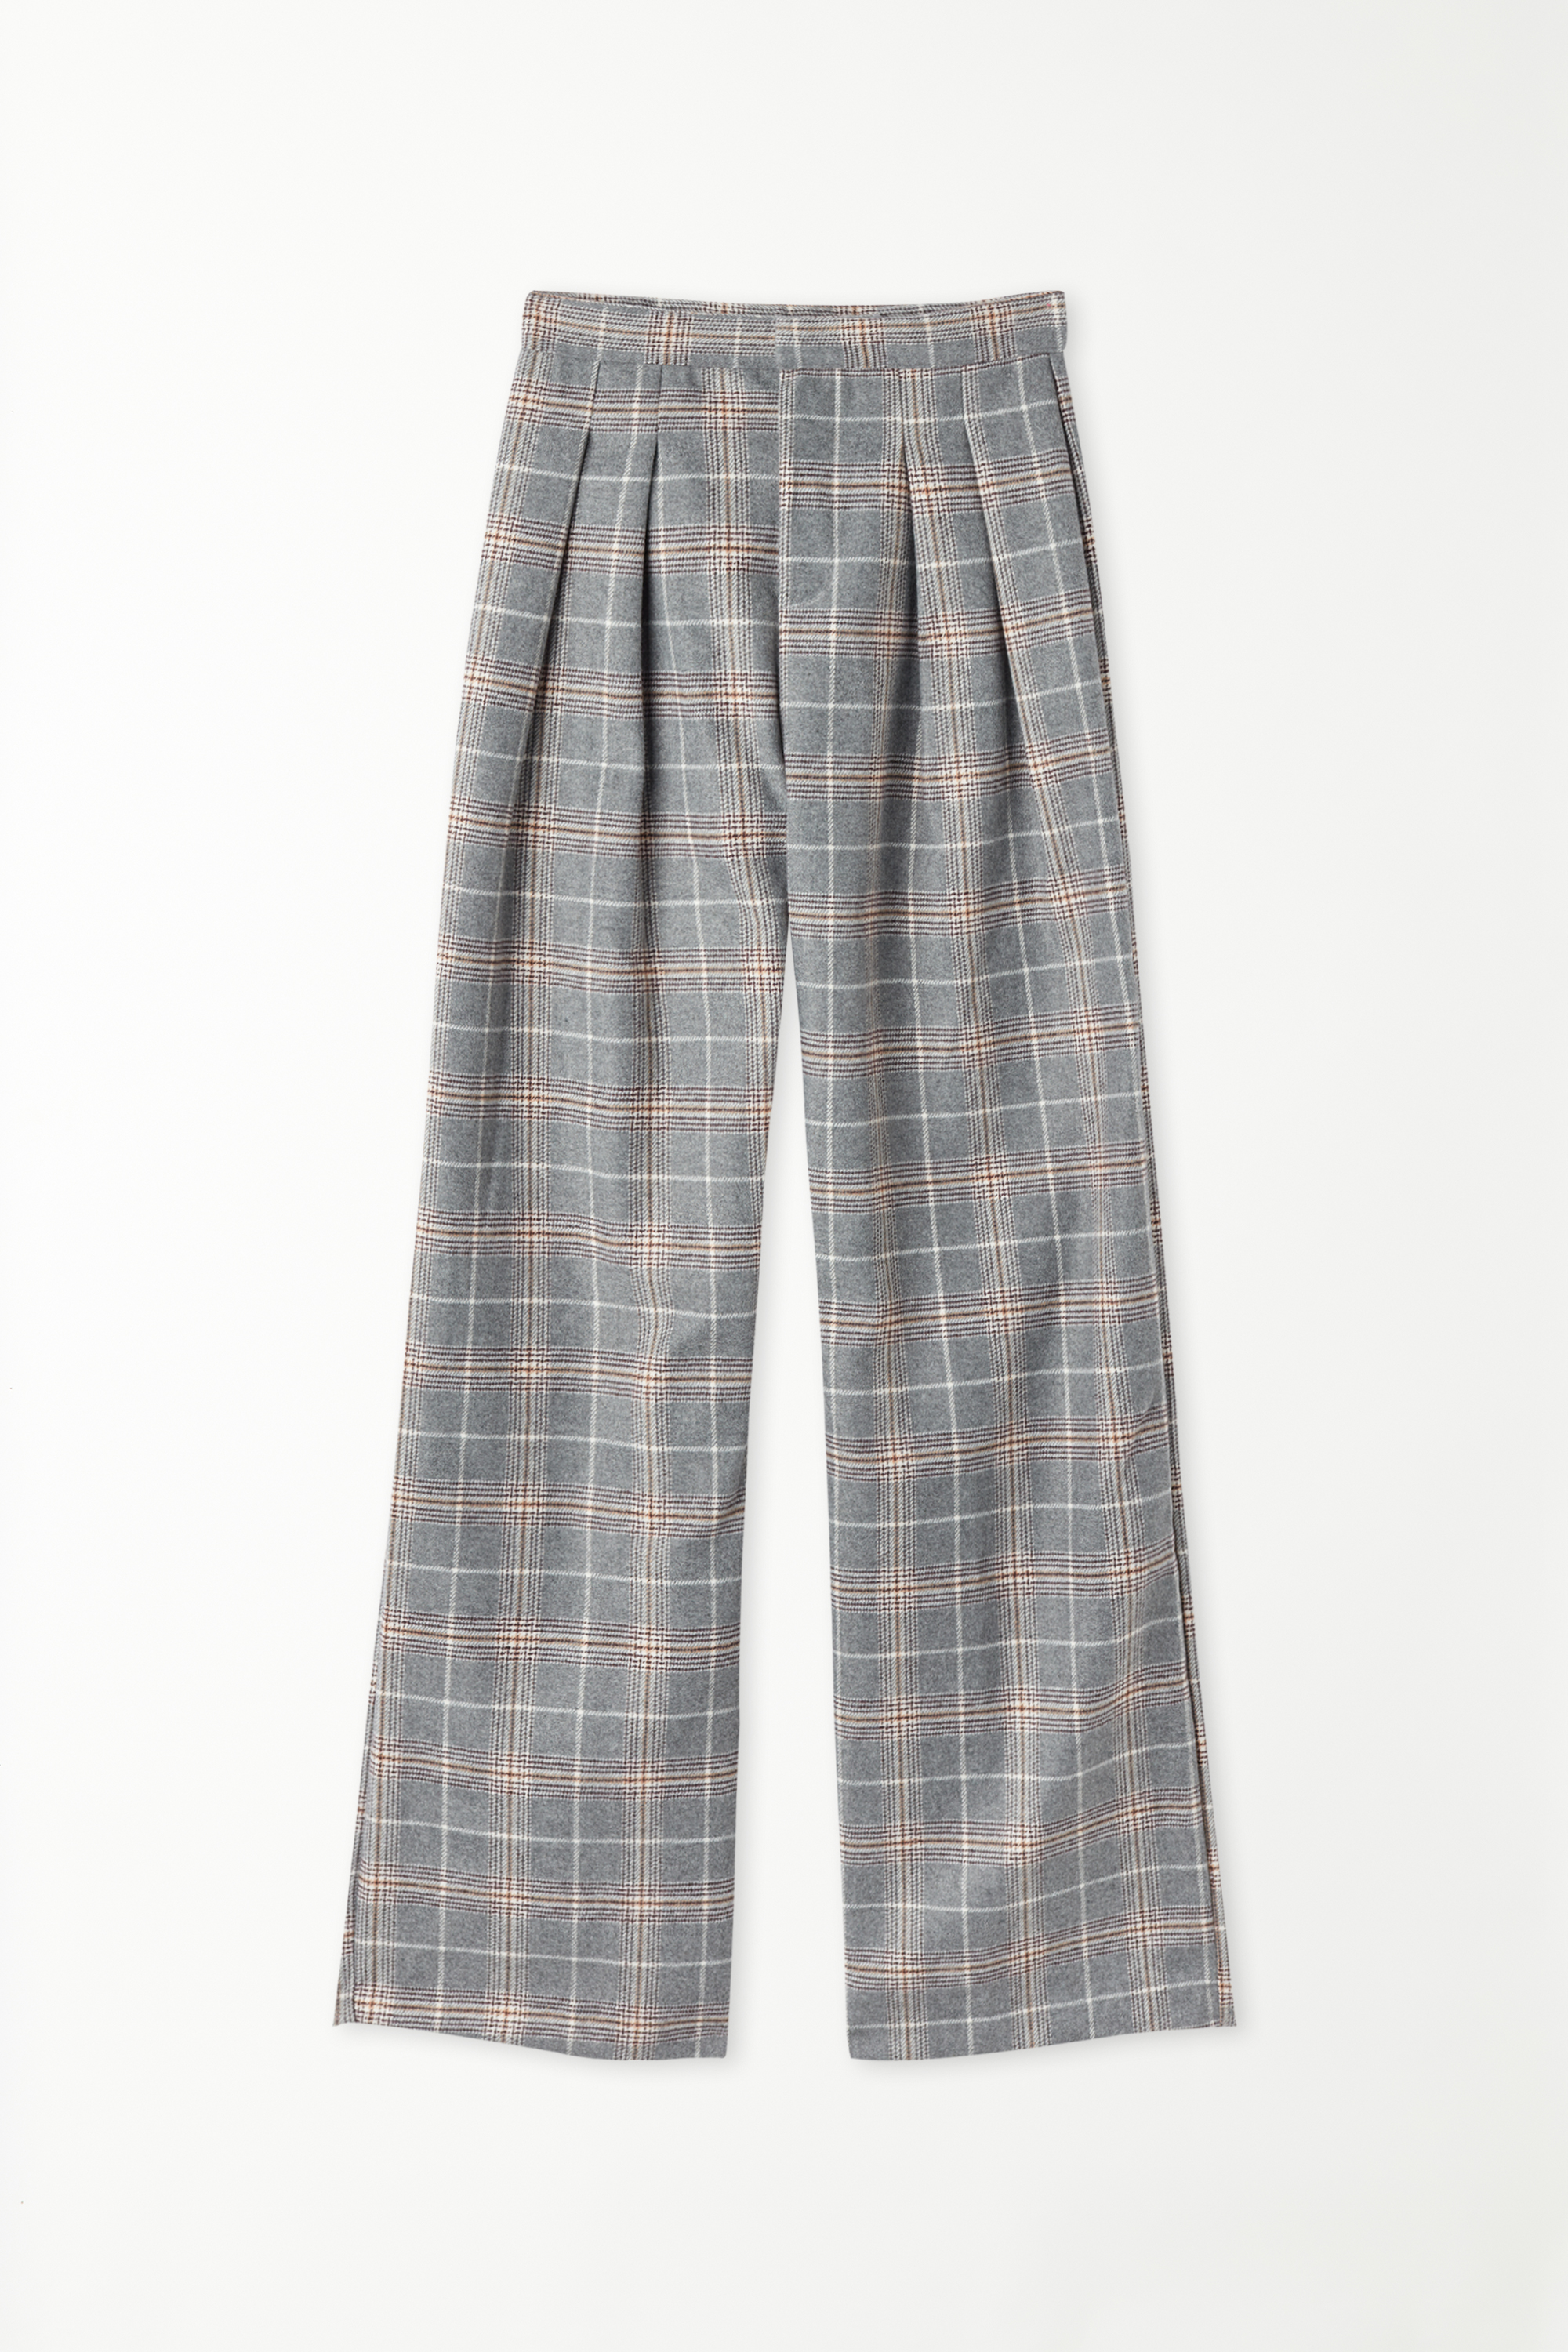 Pantalon Large Chaud Taille Haute Tweed